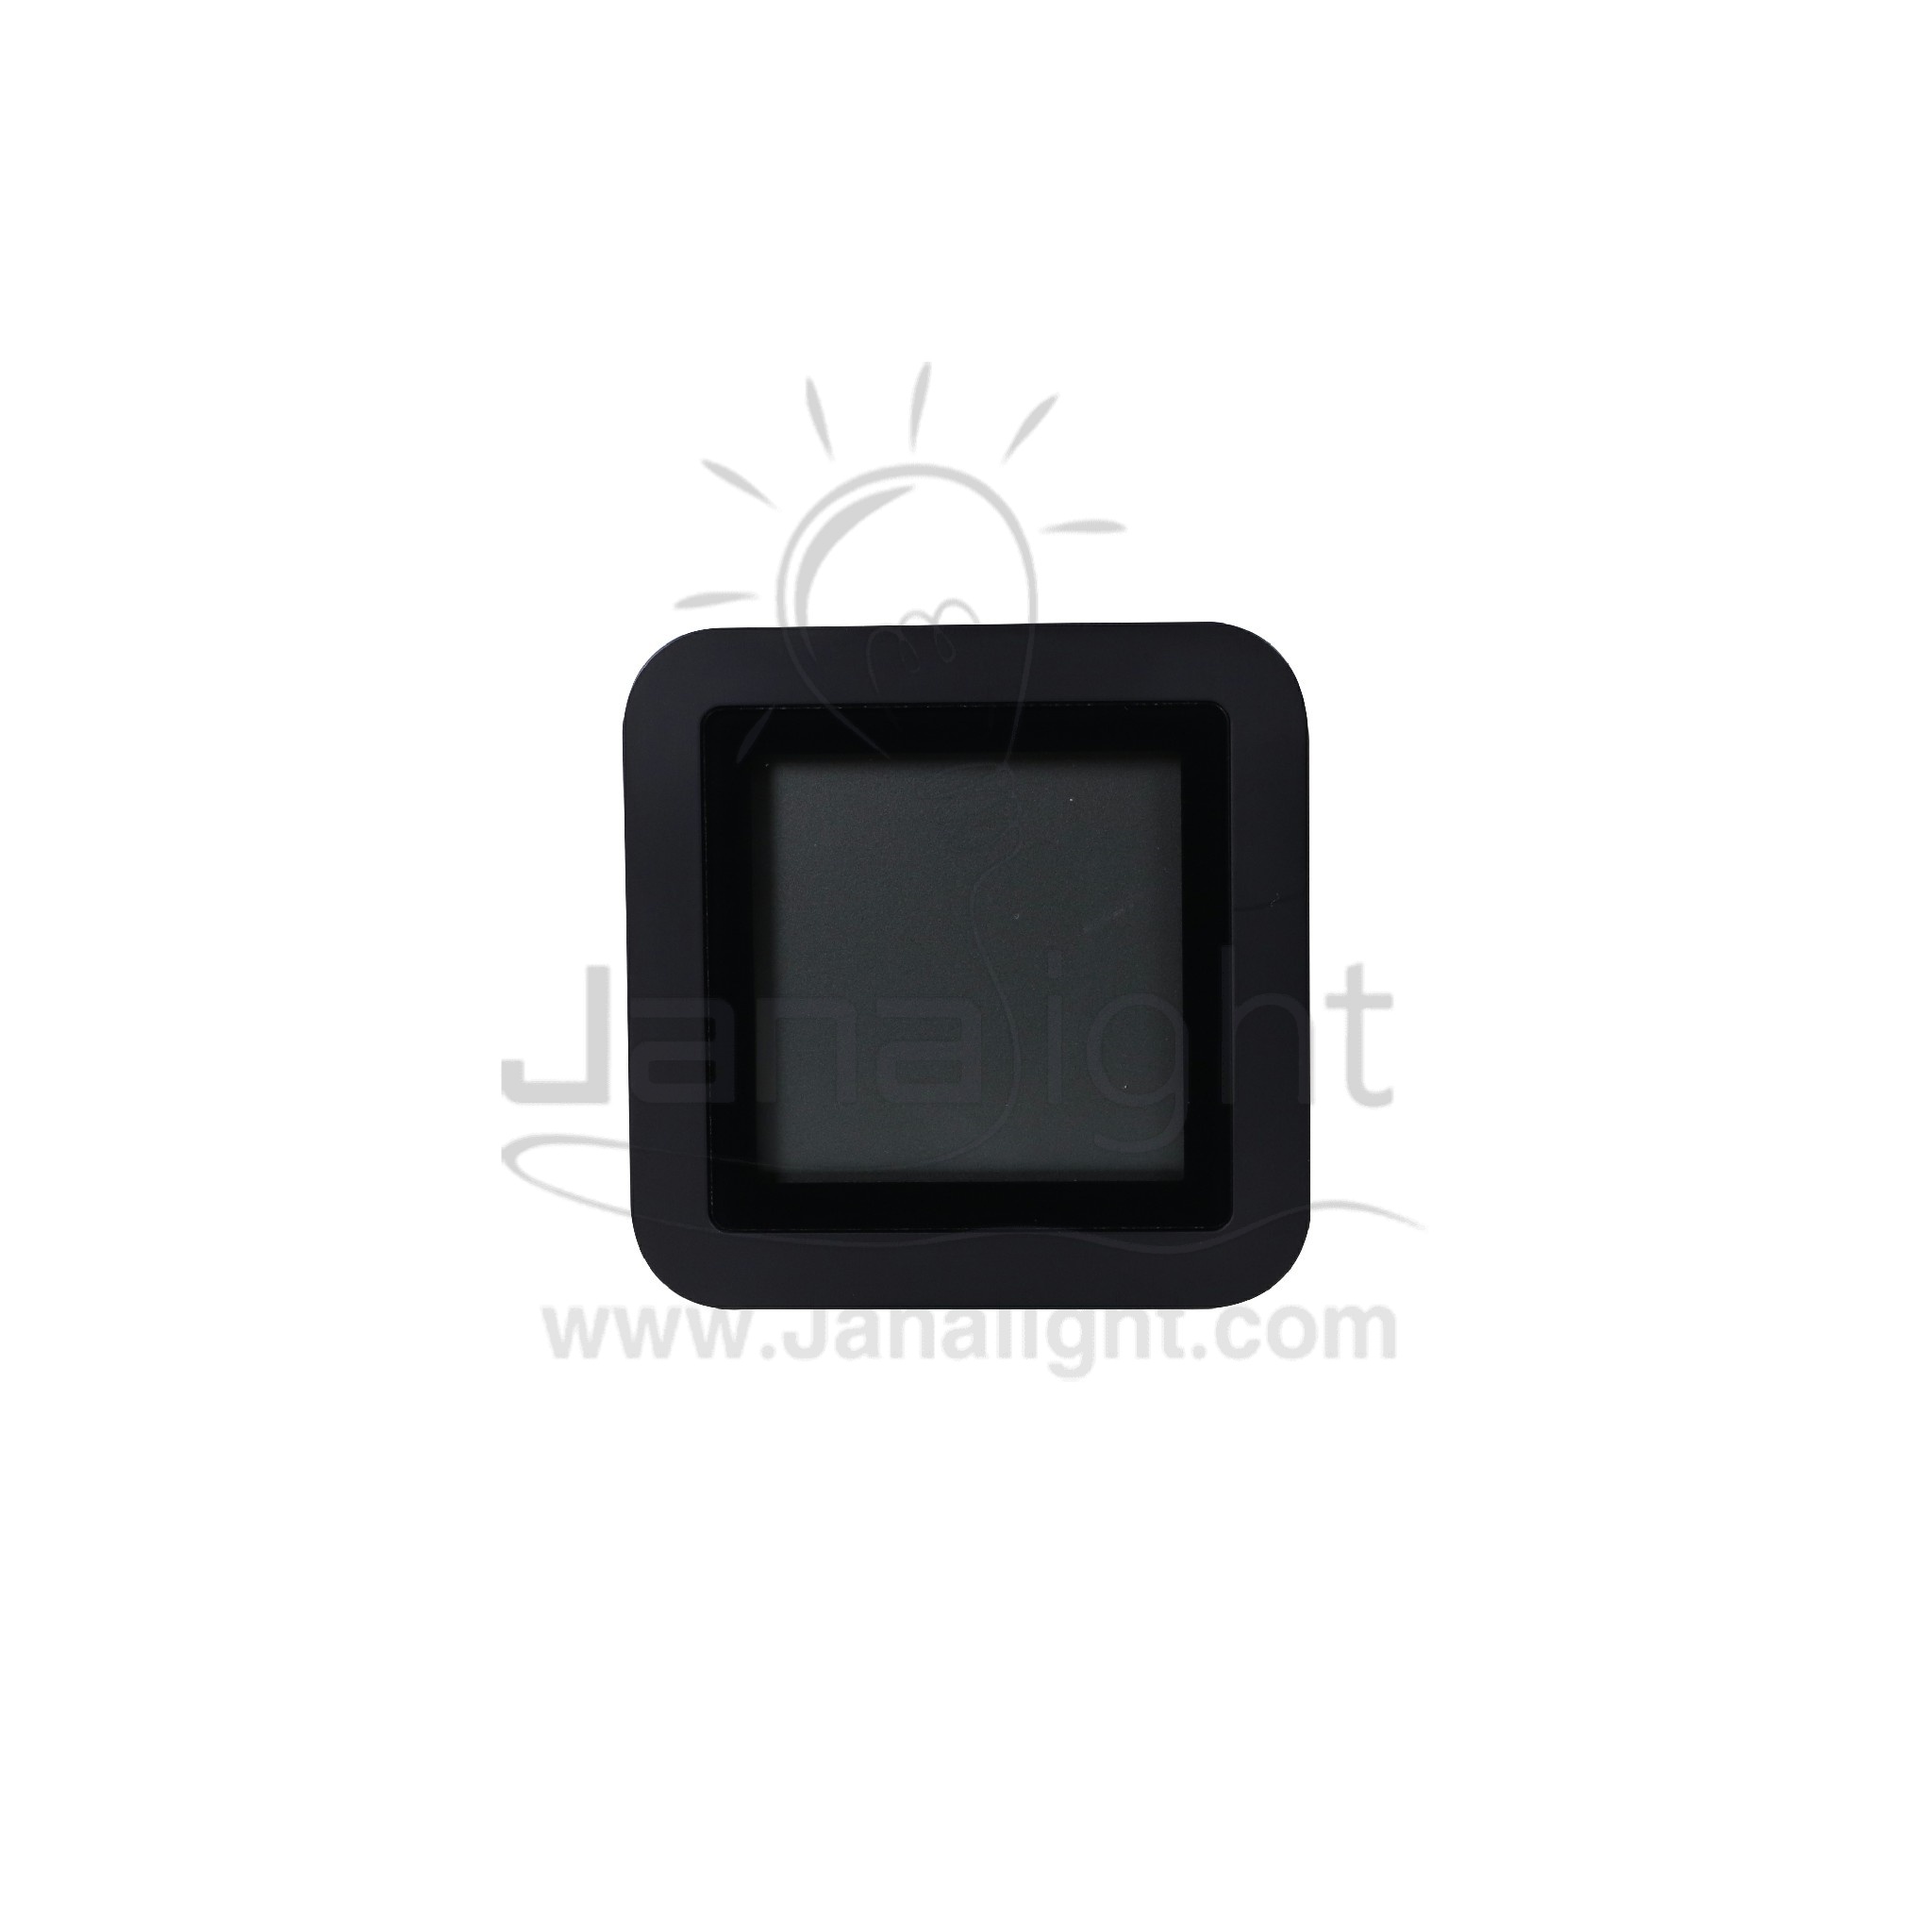 وحدة تحكم IR يونيفرسل ريموت شاشة سمارت wifi smart IR remote control square with temperature humidity display black mori